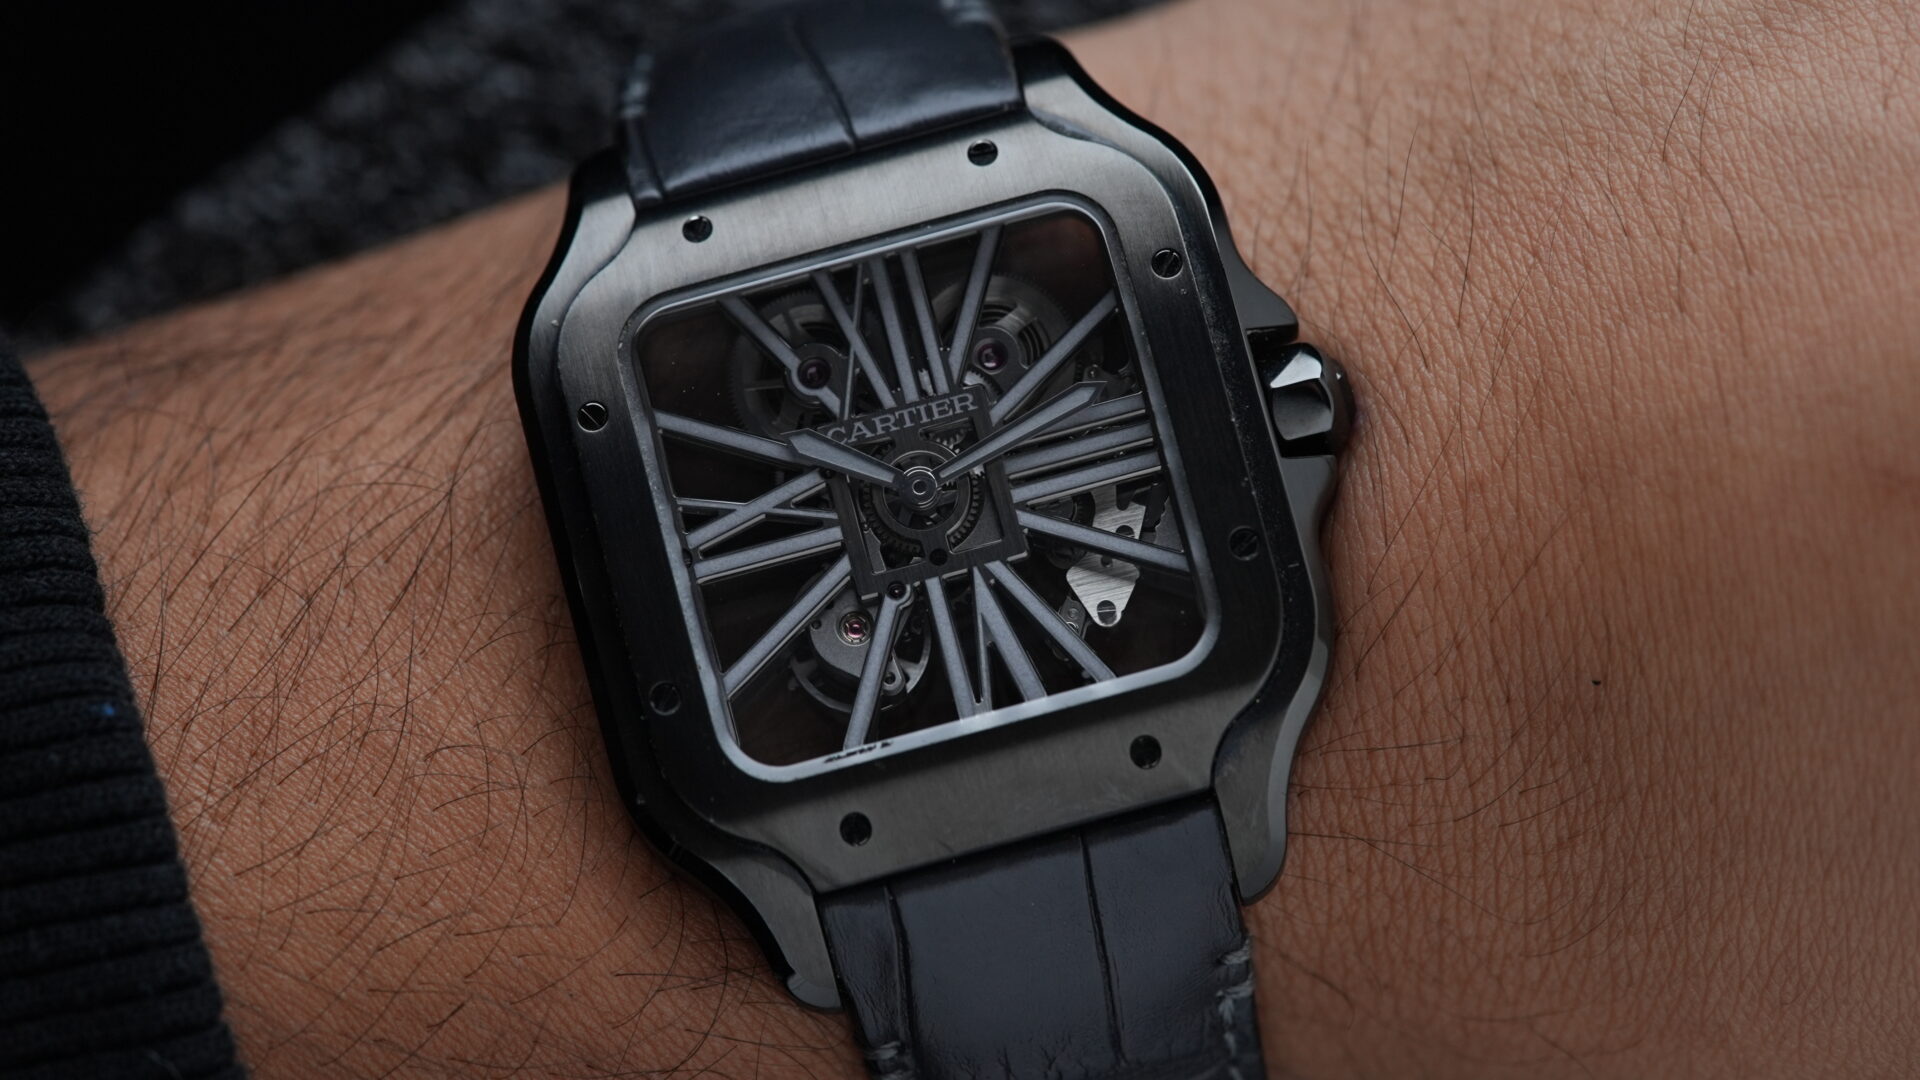 Cartier Santos De Cartier Skeleton 'Black Panther watch' featured on the wrist.